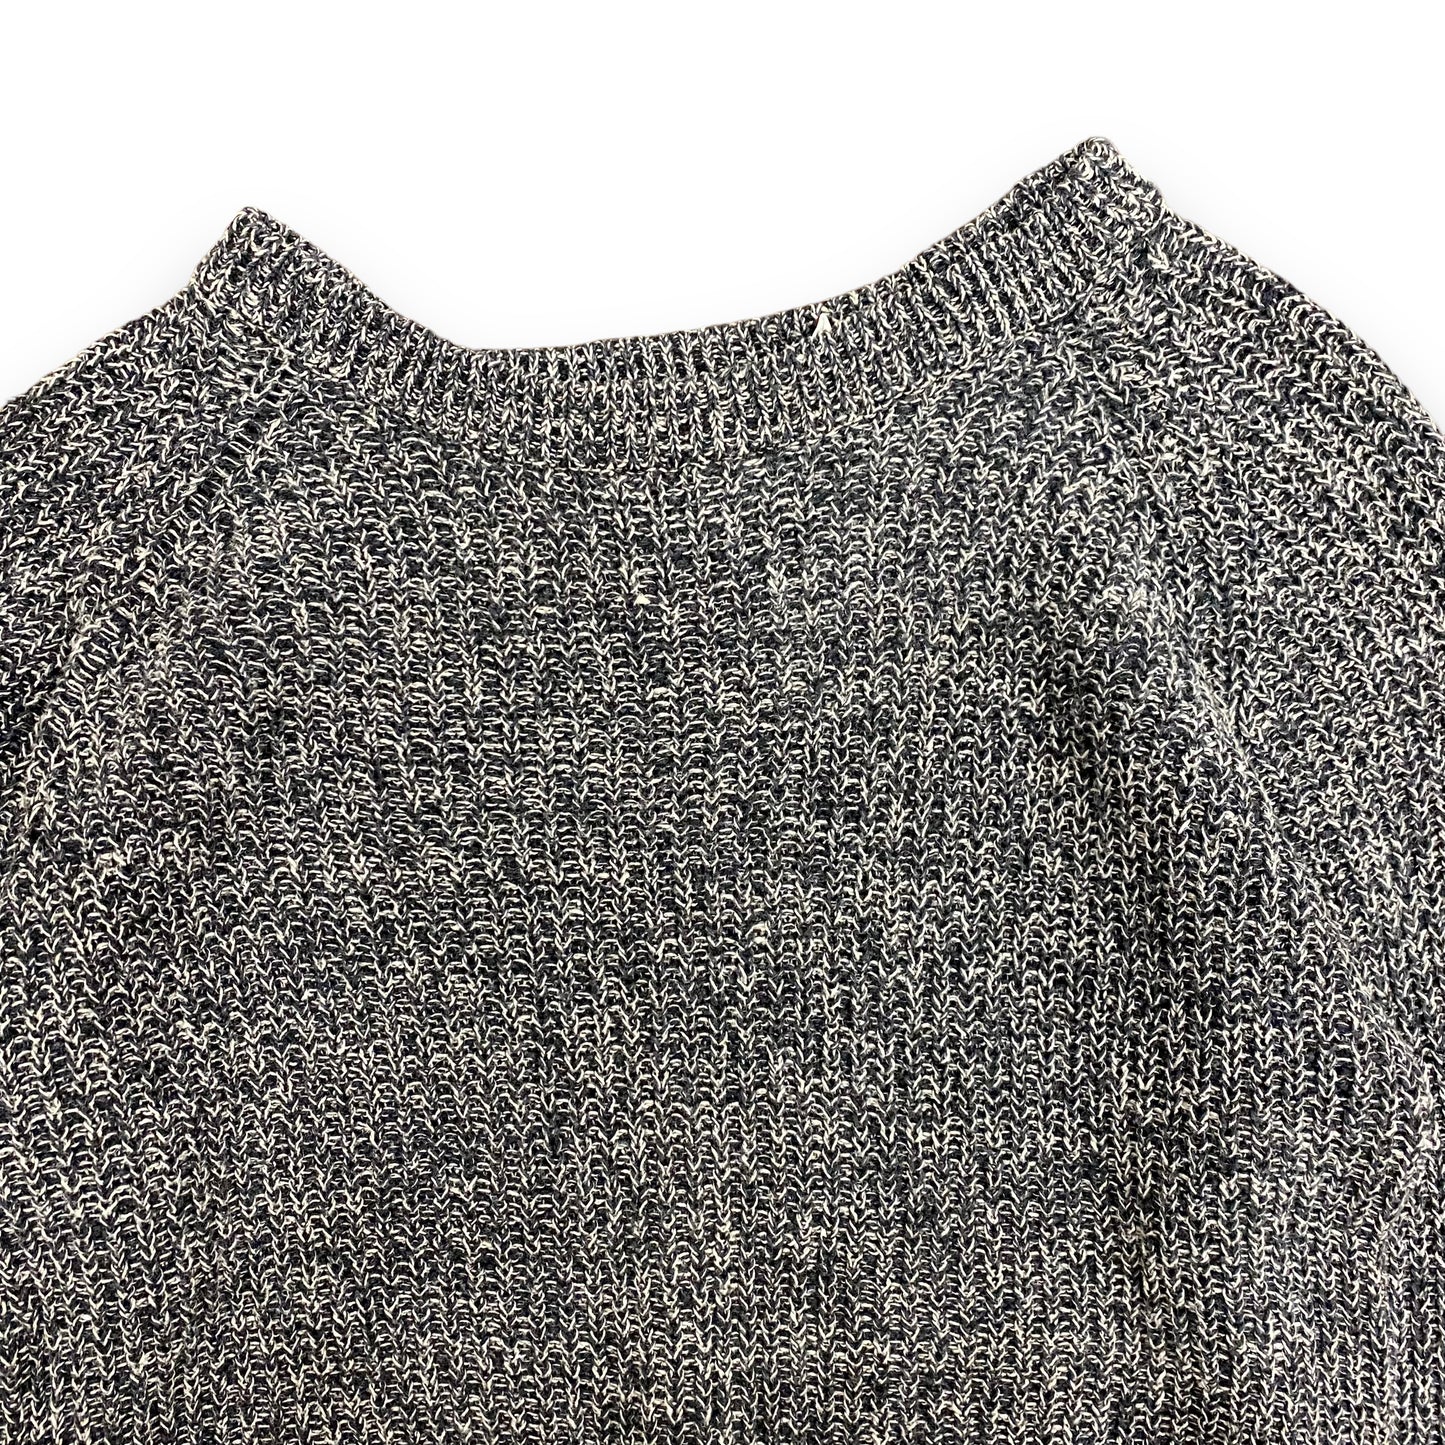 Vintage 100% Cotton Black & White Knit Sweater - Size Large